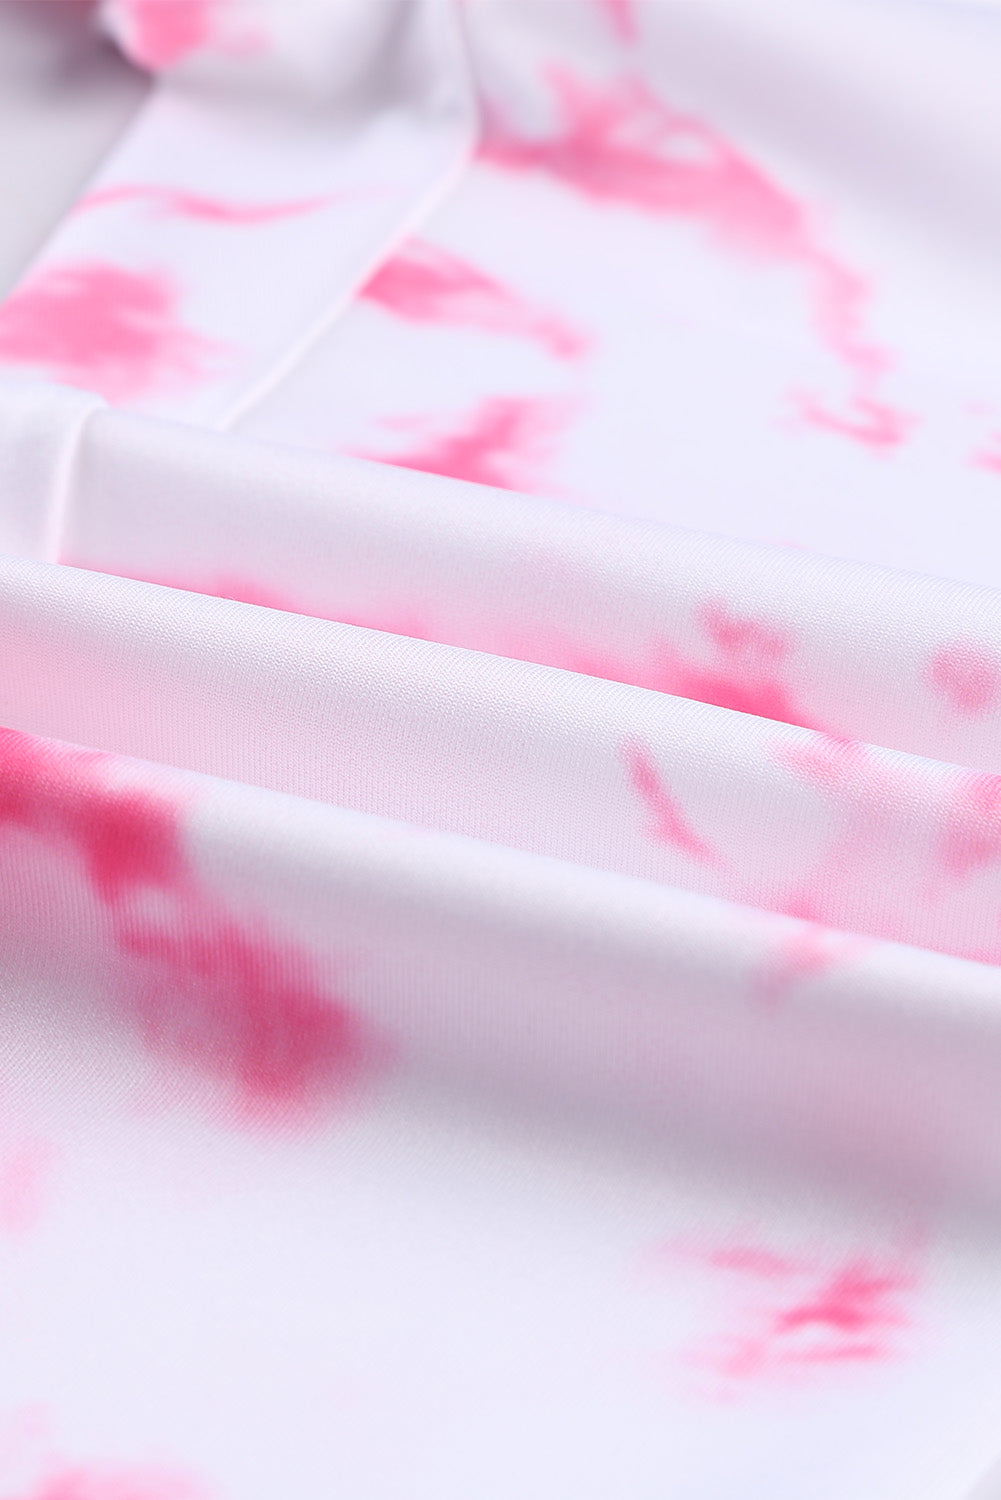 Women's Pink White Tie-dye Crisscross Sport Bra and Leggings Set